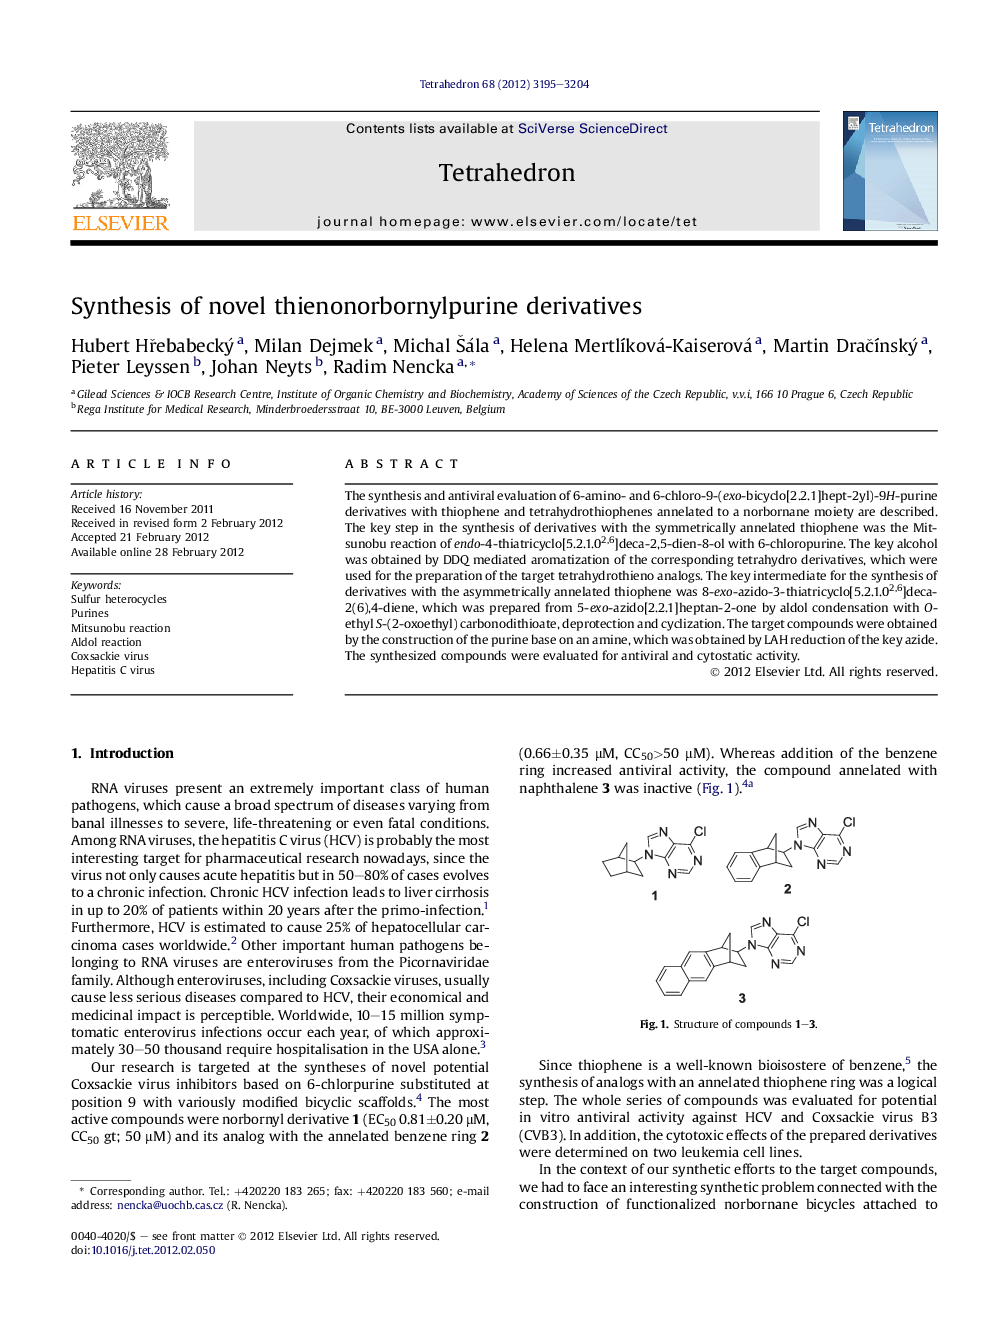 Synthesis of novel thienonorbornylpurine derivatives